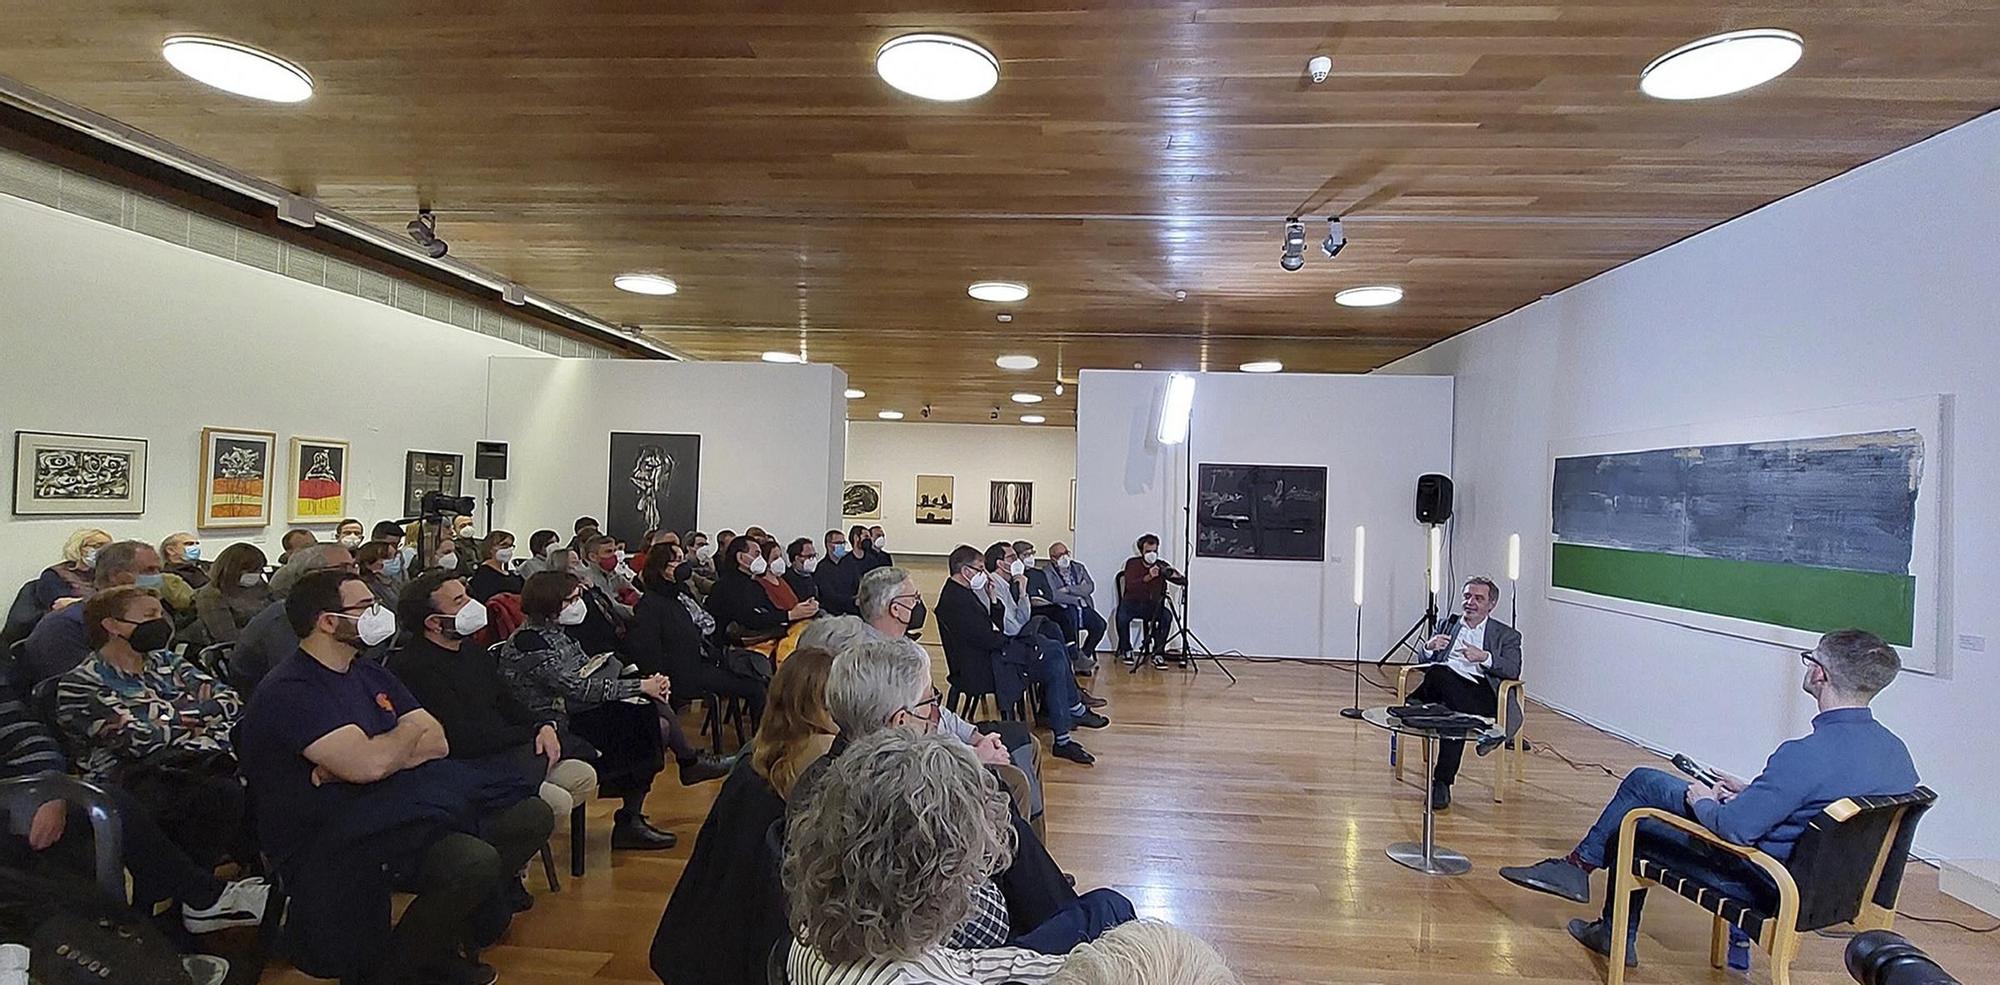 El Institut Valencià de Cultura (IVC) promueve este ciclo de charlas con personalidades del ámbito cultural nacional.